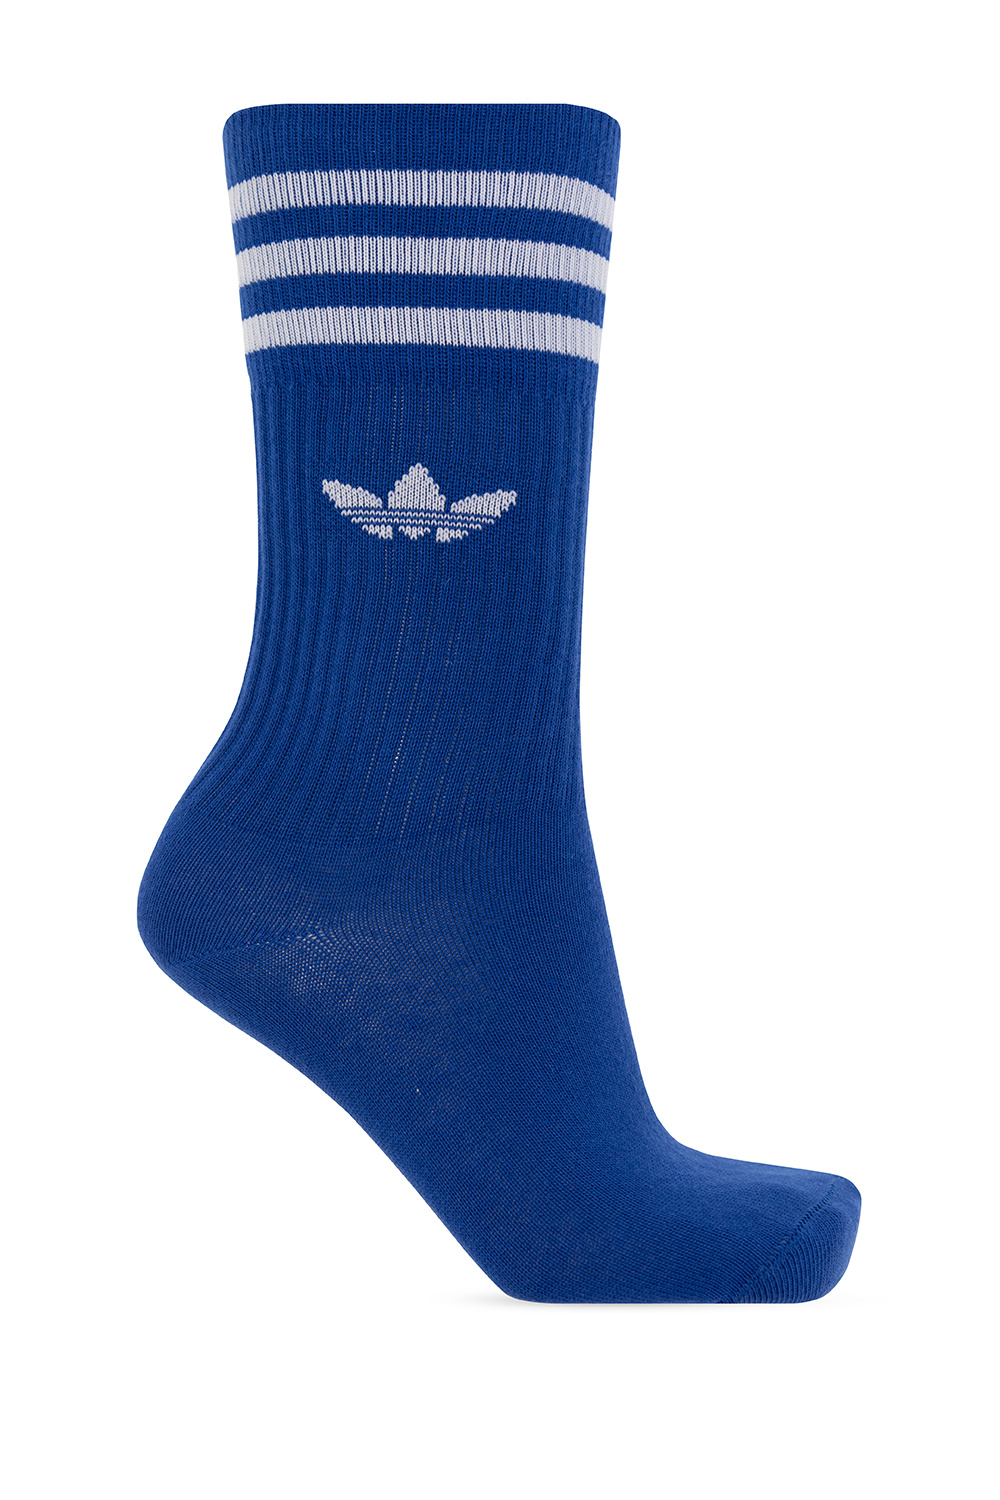 IetpShops Kiribati - Branded socks three - Originals - The adidas Yung-1 Gets The